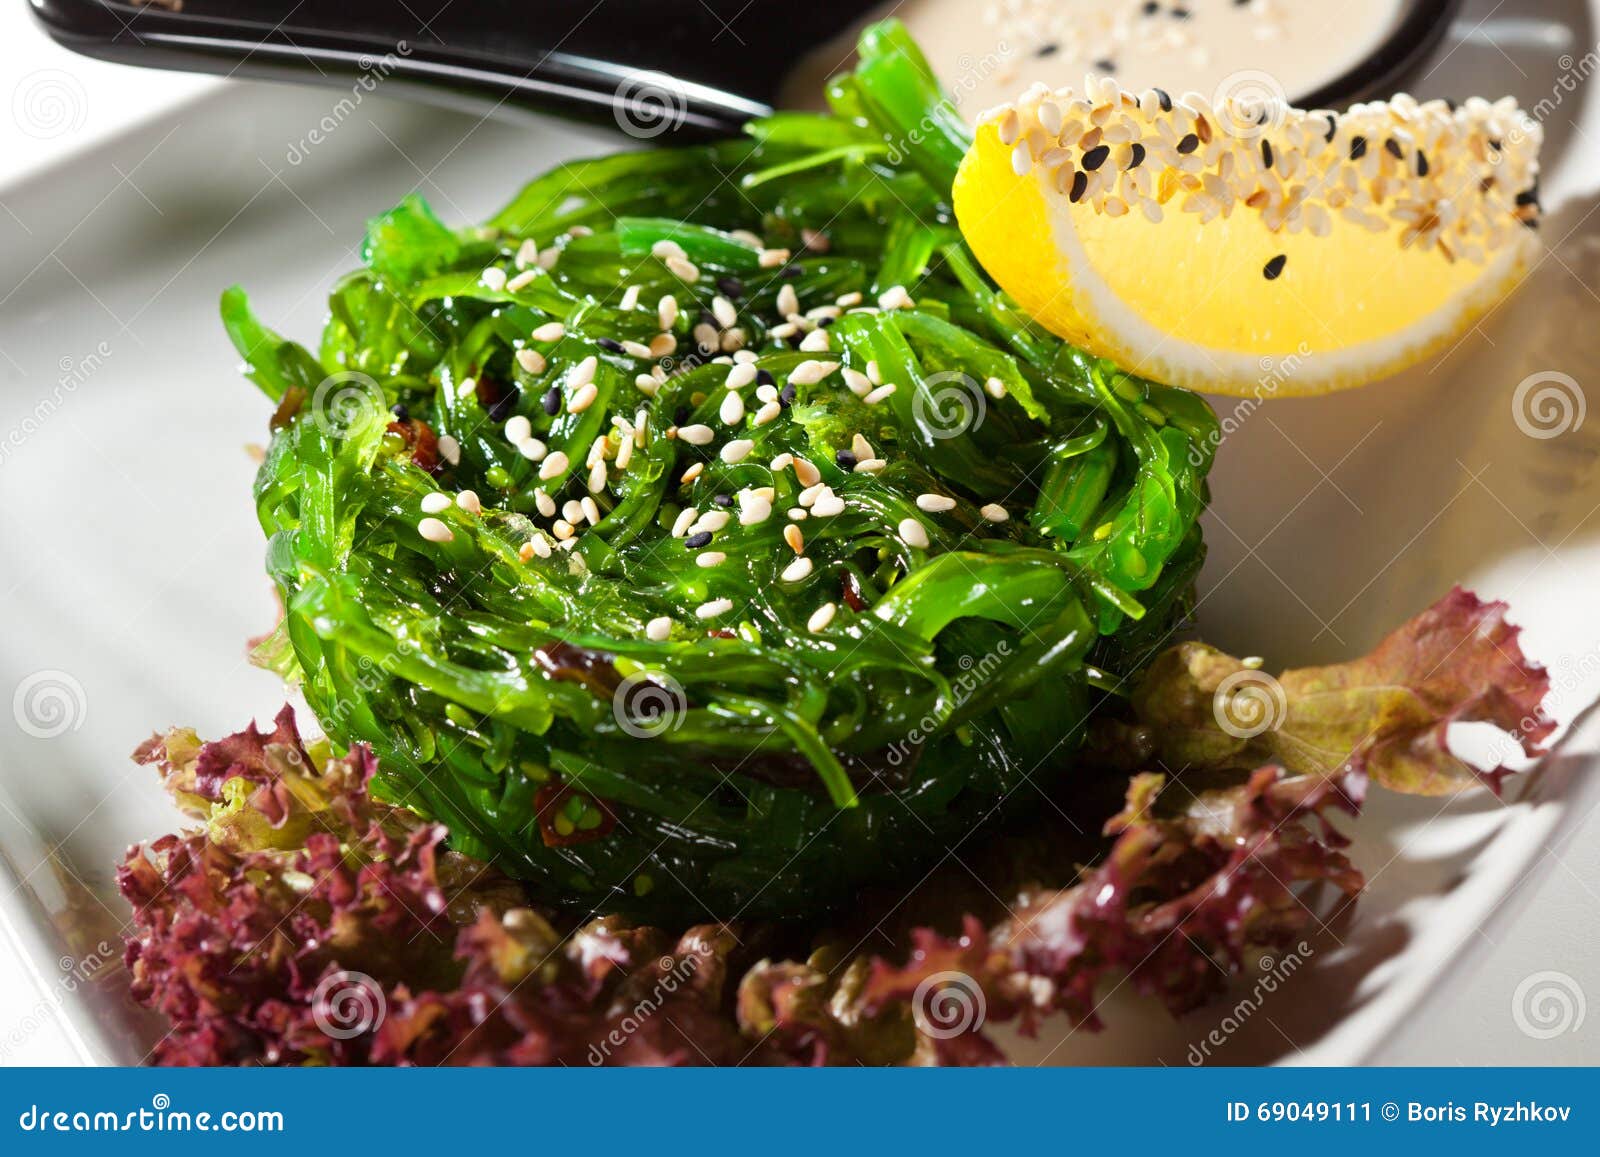 Chuka Seaweed Salad stock image. Image of culture, fresh - 69049111